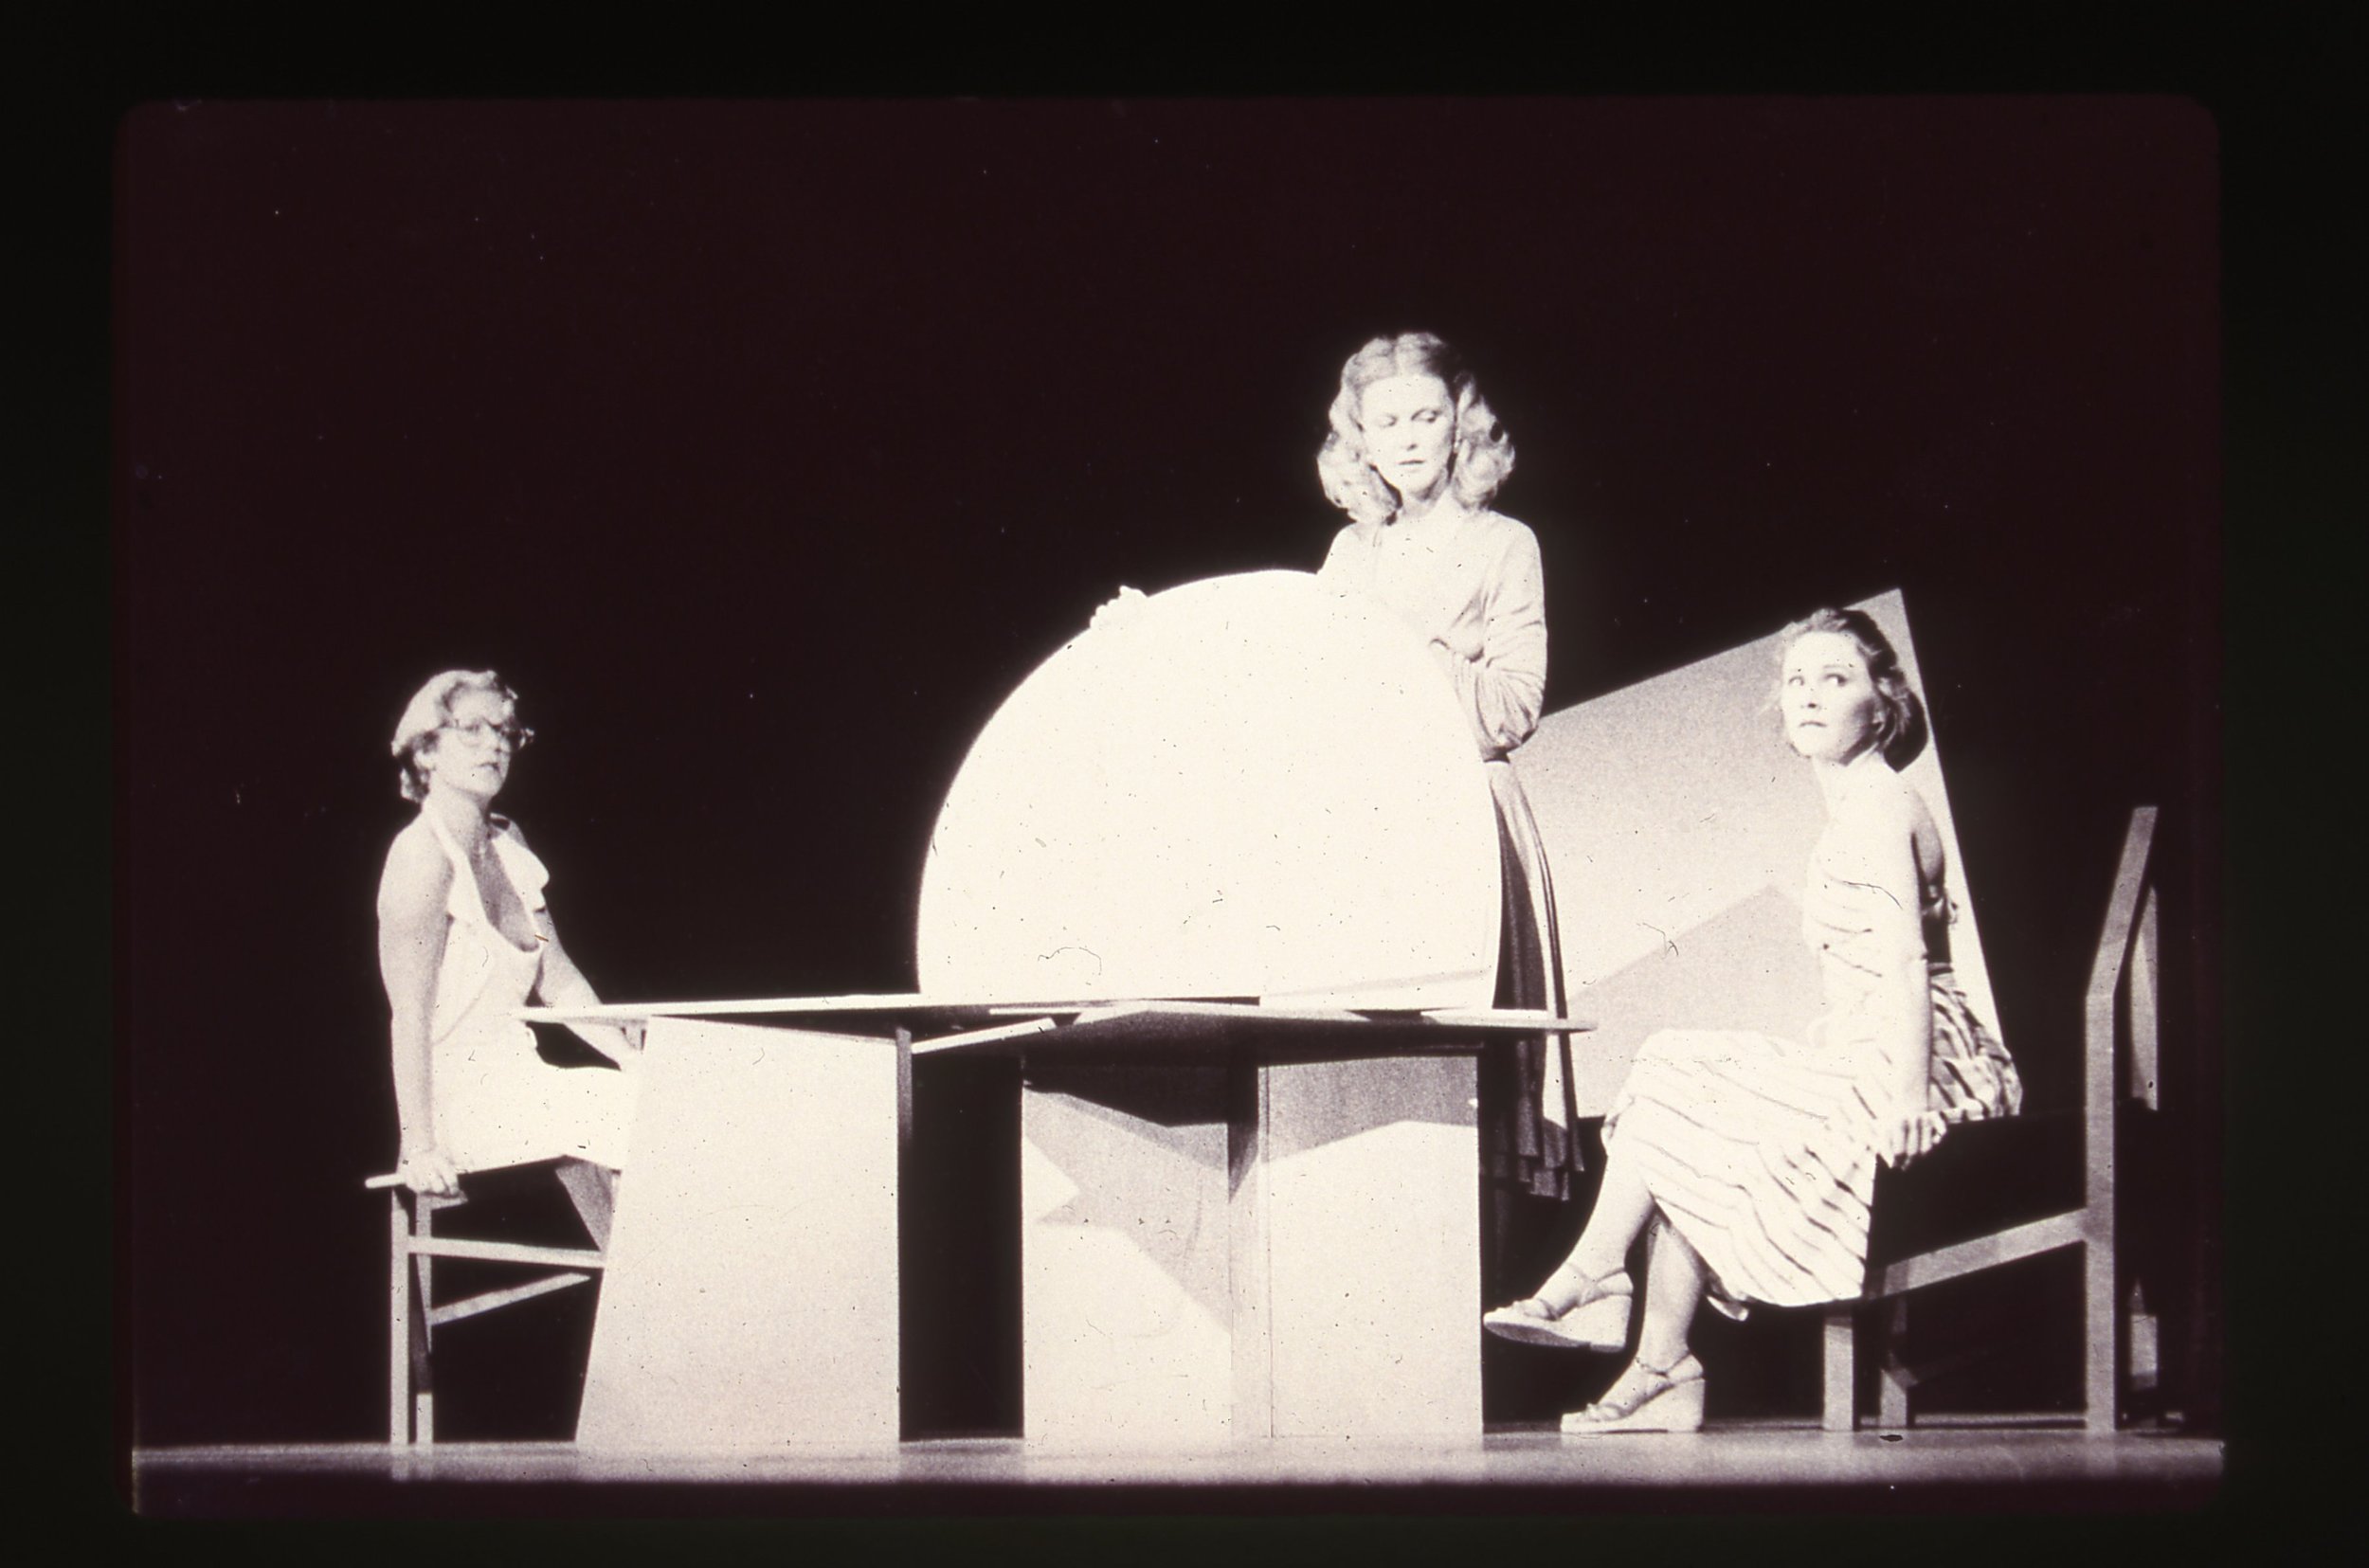 Original Staging, Pilot theatre, Hollywood, 1977